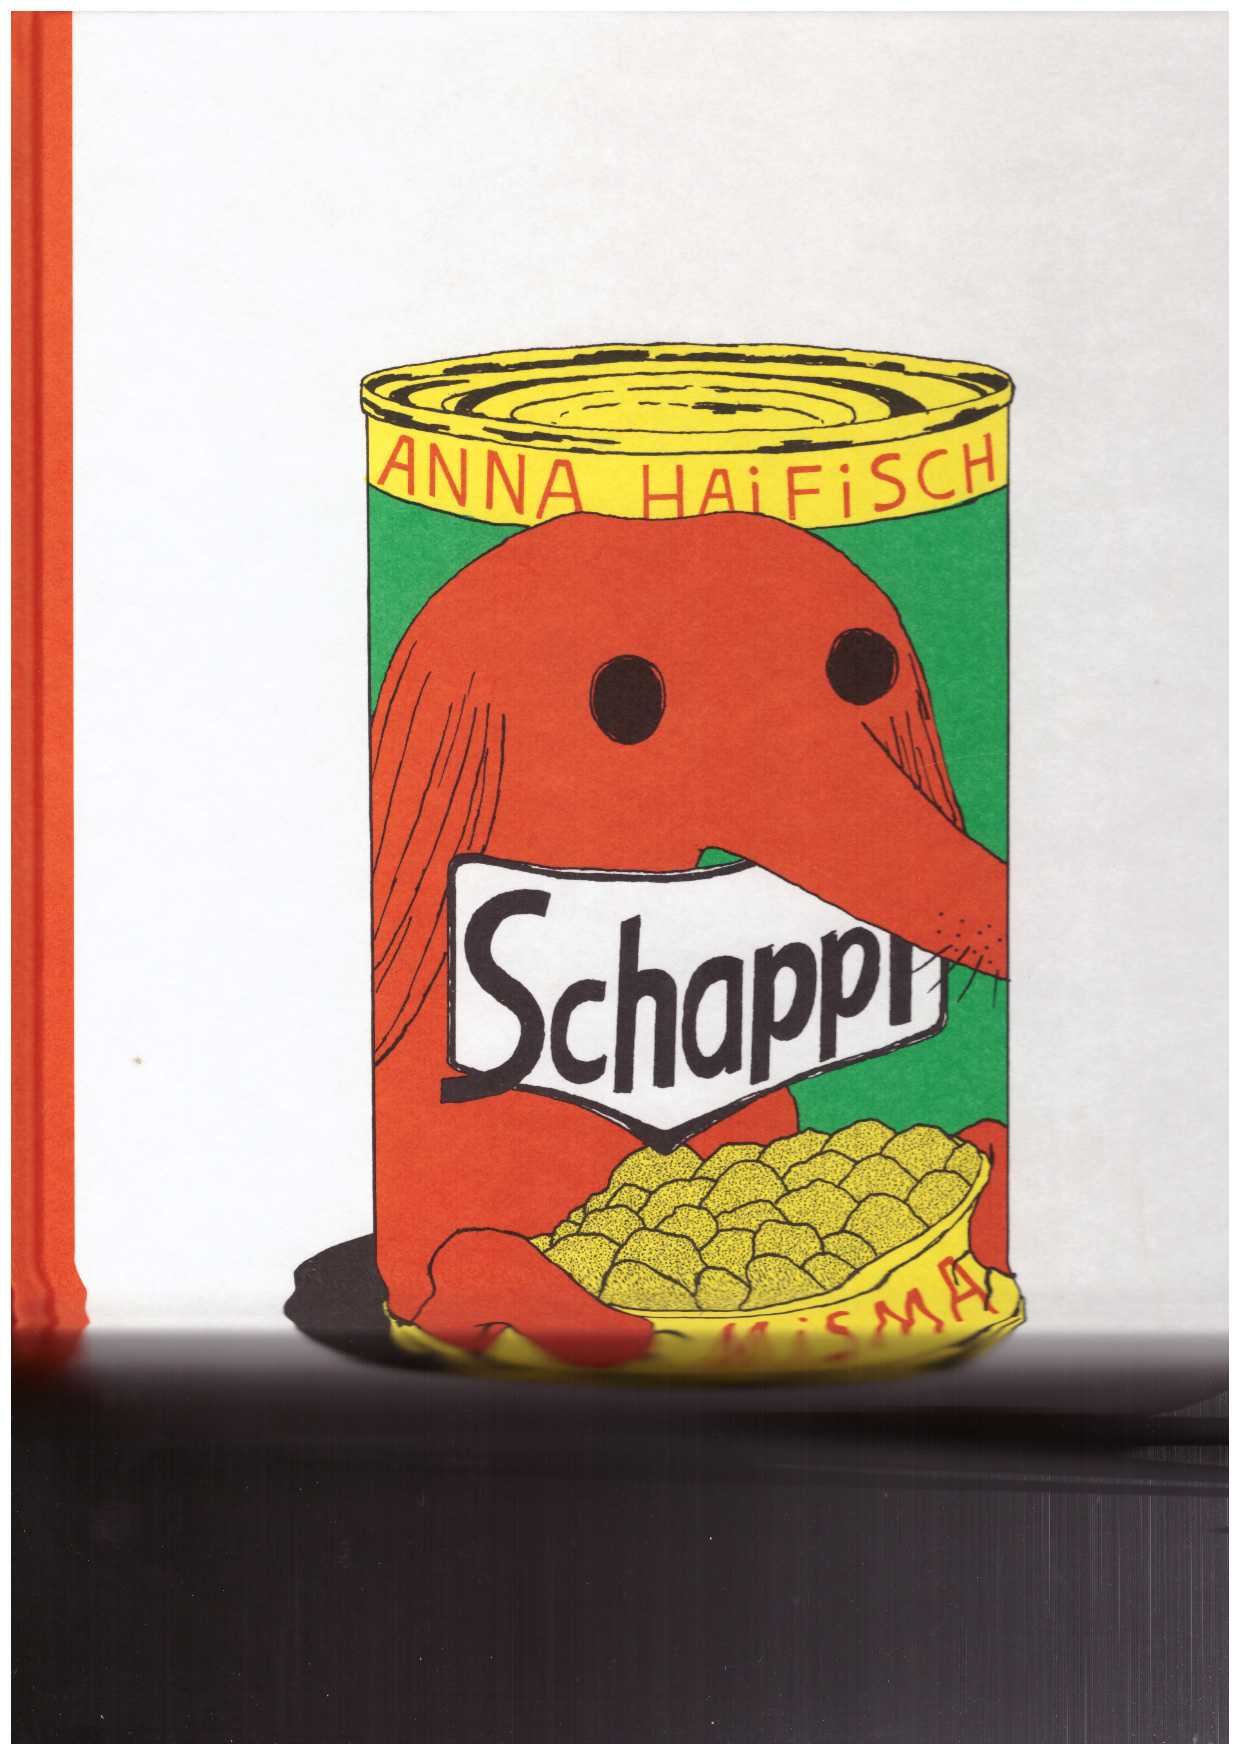 HAIFISH, Anna - Schappi